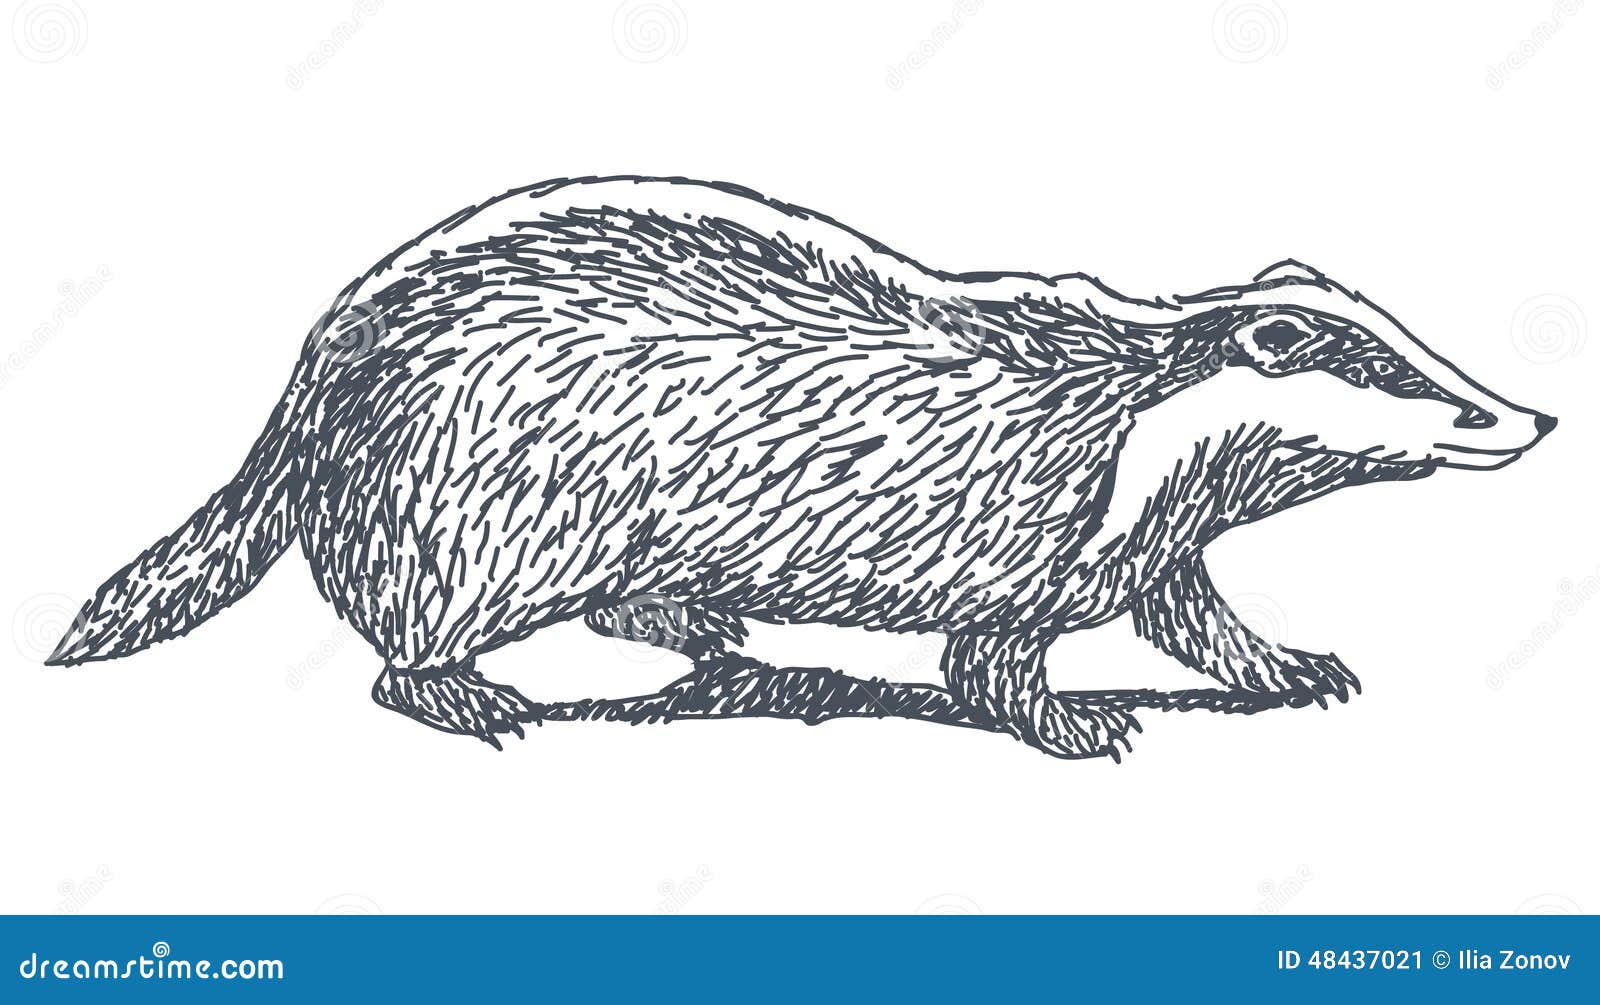 badger drawing